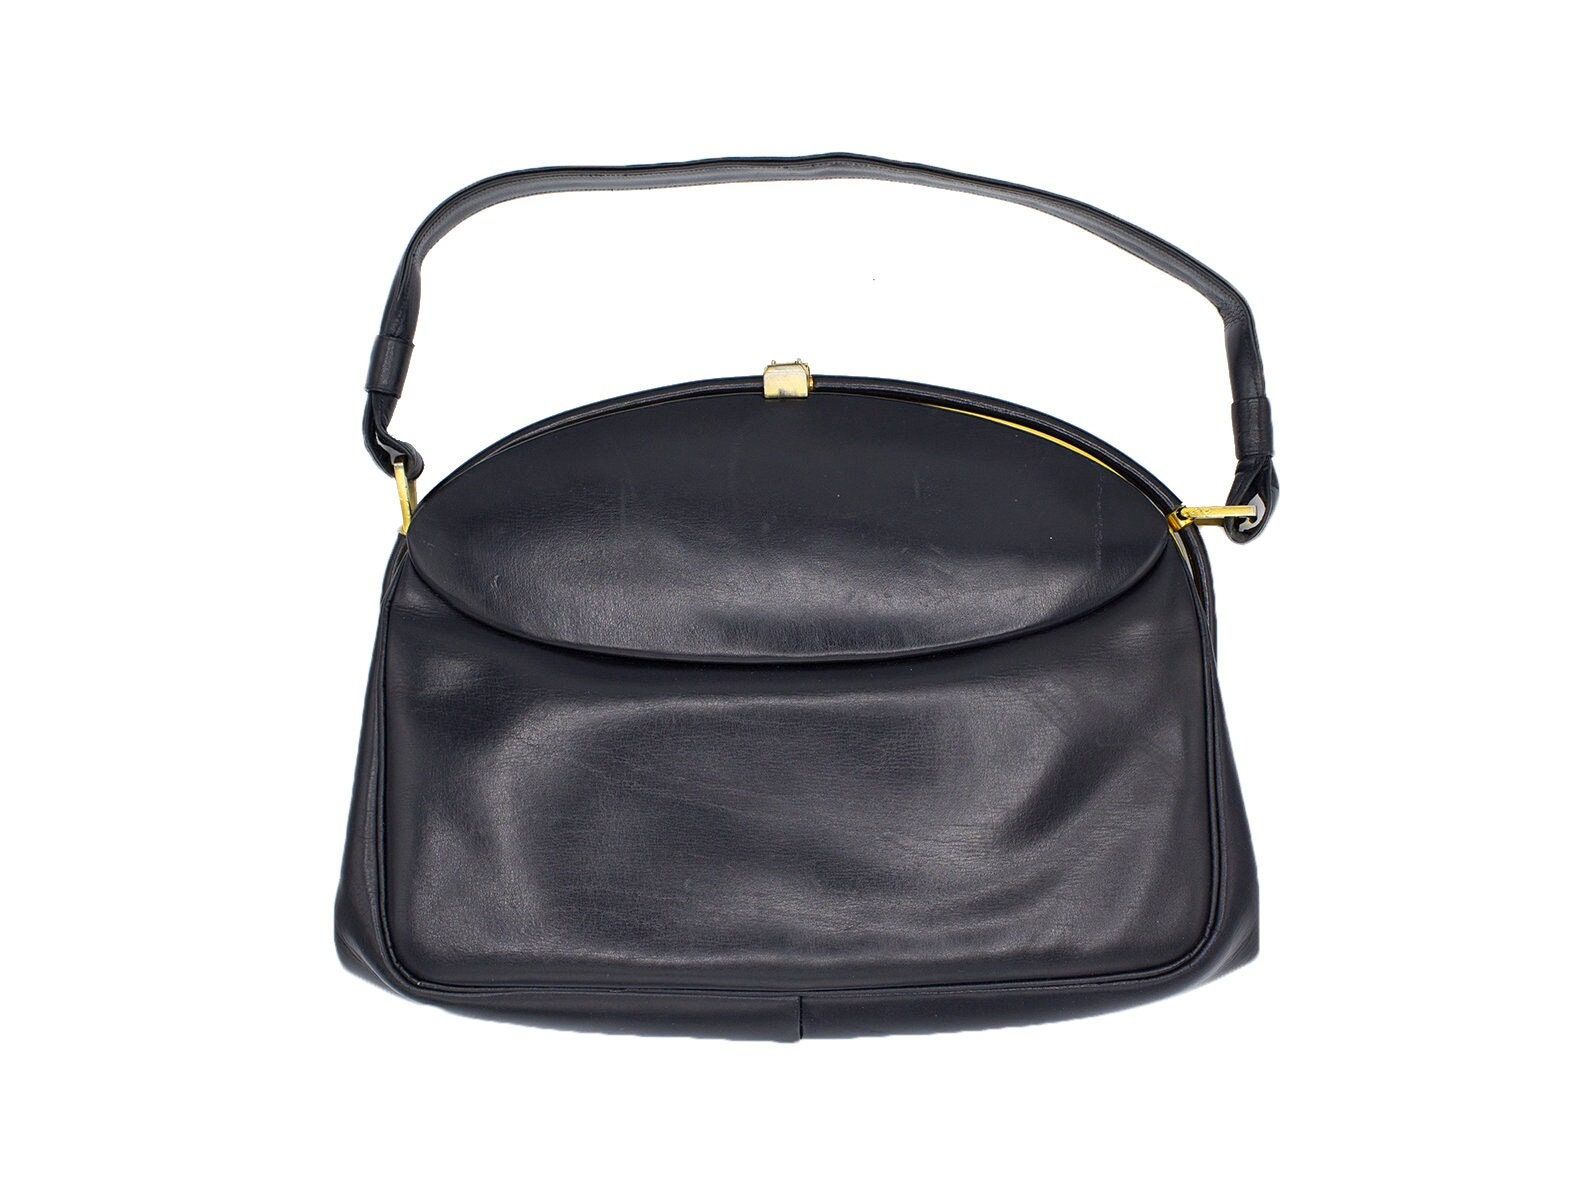 Authentic LAUNER shoulder clutch bag crossbody leather British